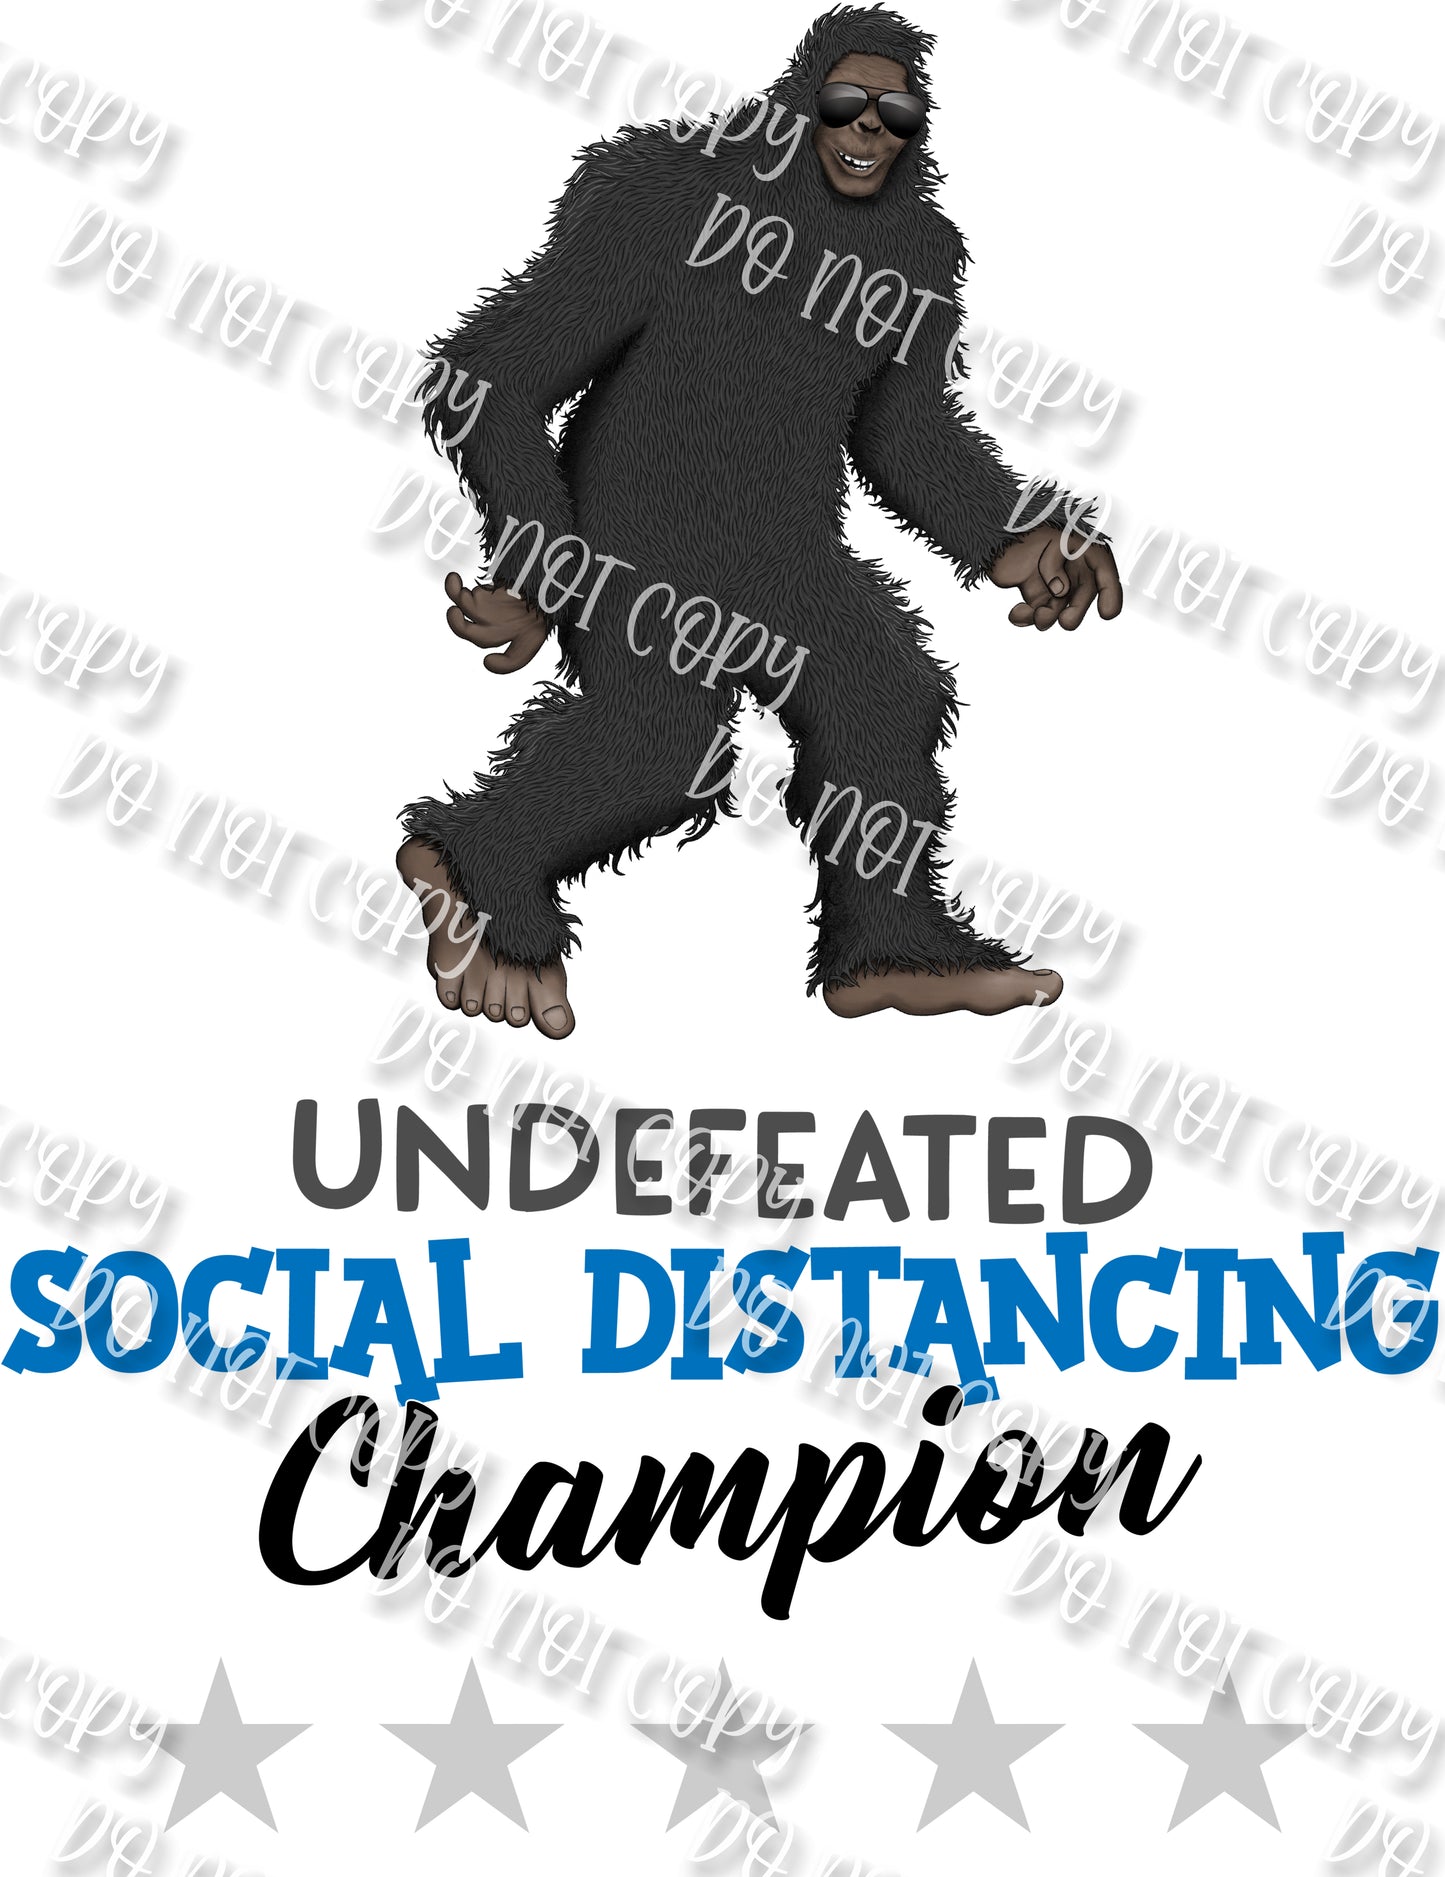 Social Distancing Champ Sub